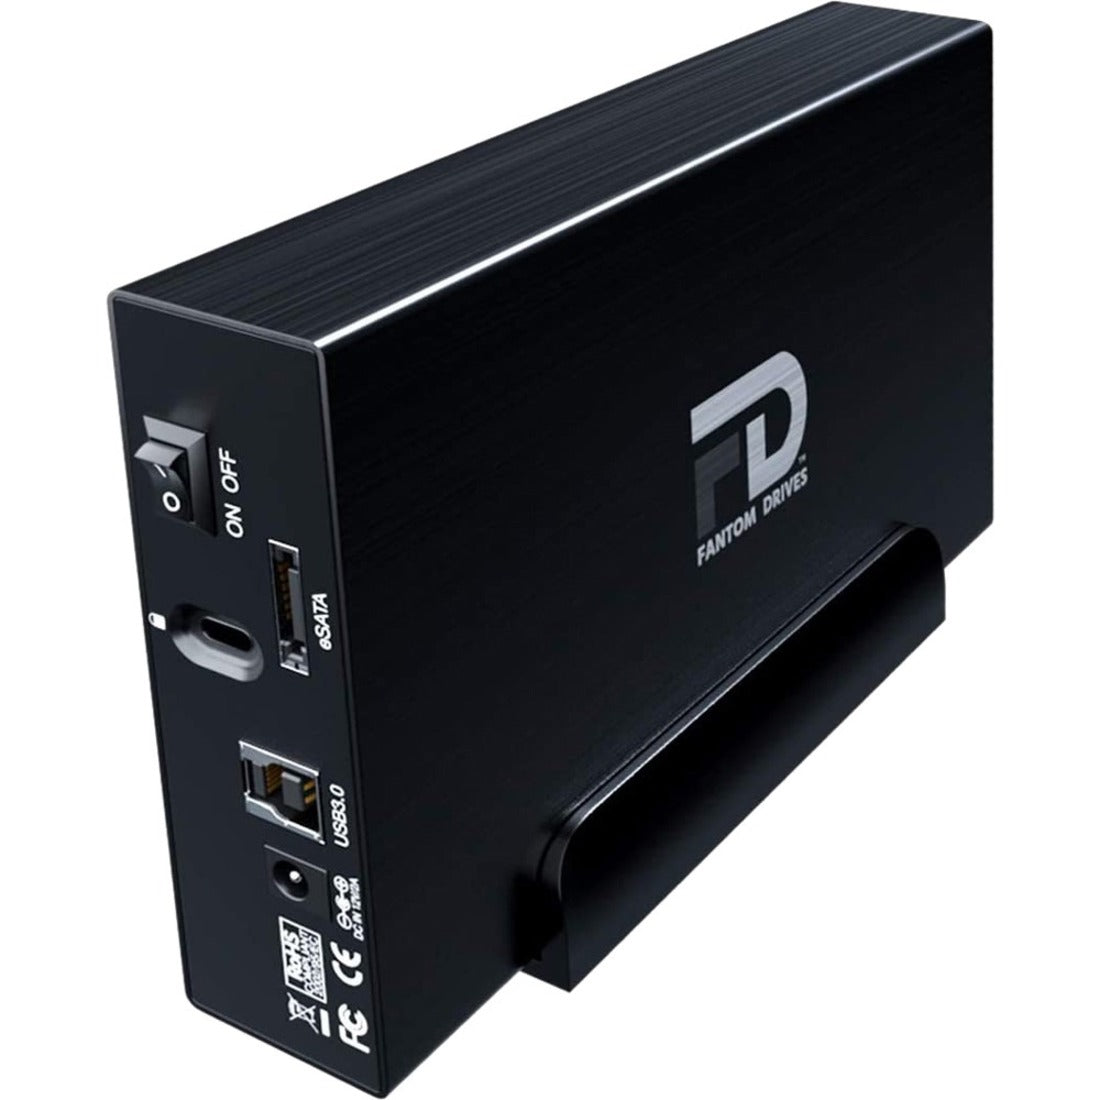 Fantom Drives 16TB External Hard Drive - GFORCE 3 - USB 3 eSATA Aluminum Black GF3B16000EU